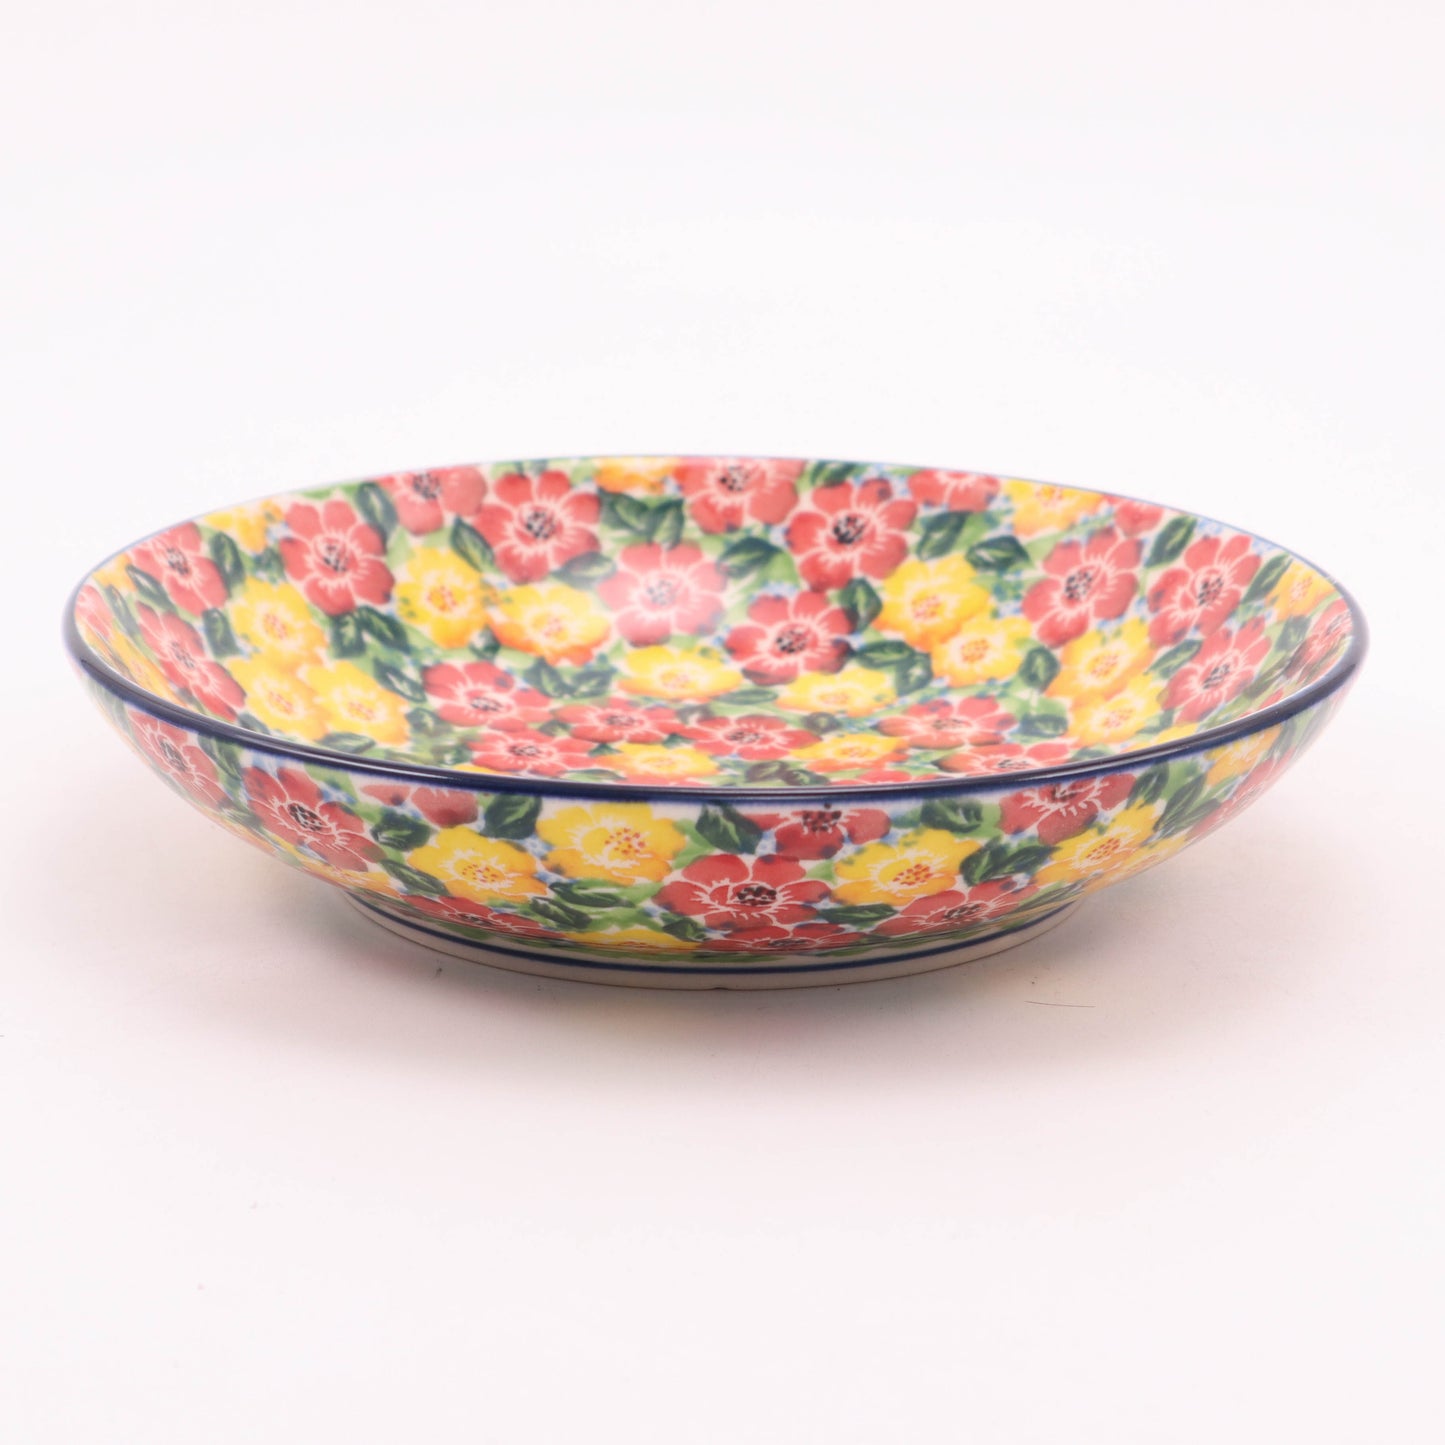 8.5" Pasta Bowl. Pattern: Cheerful Bouquet